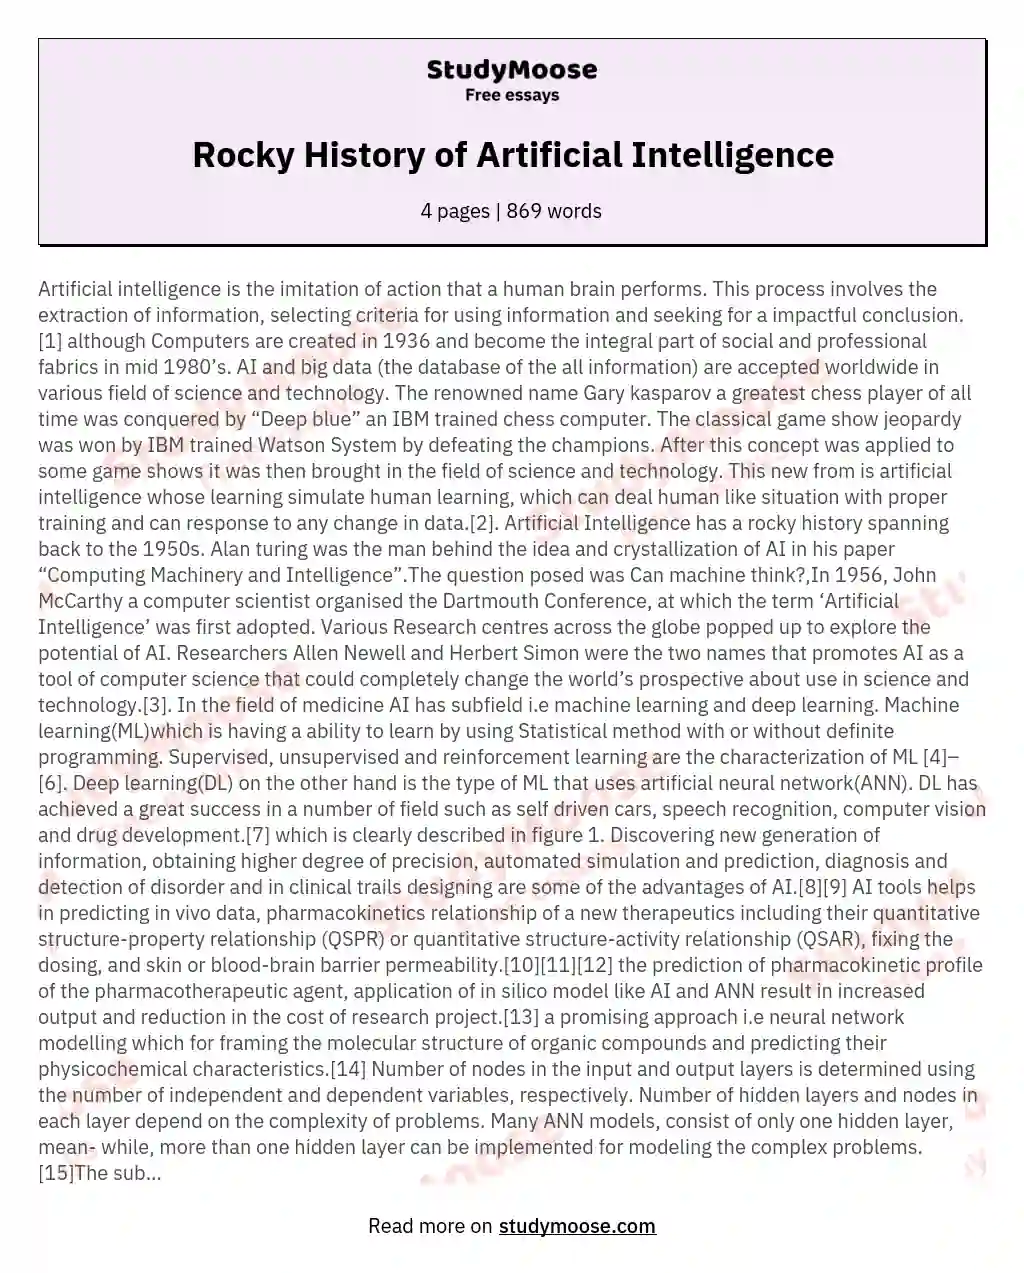 Rocky History of Artificial Intelligence essay